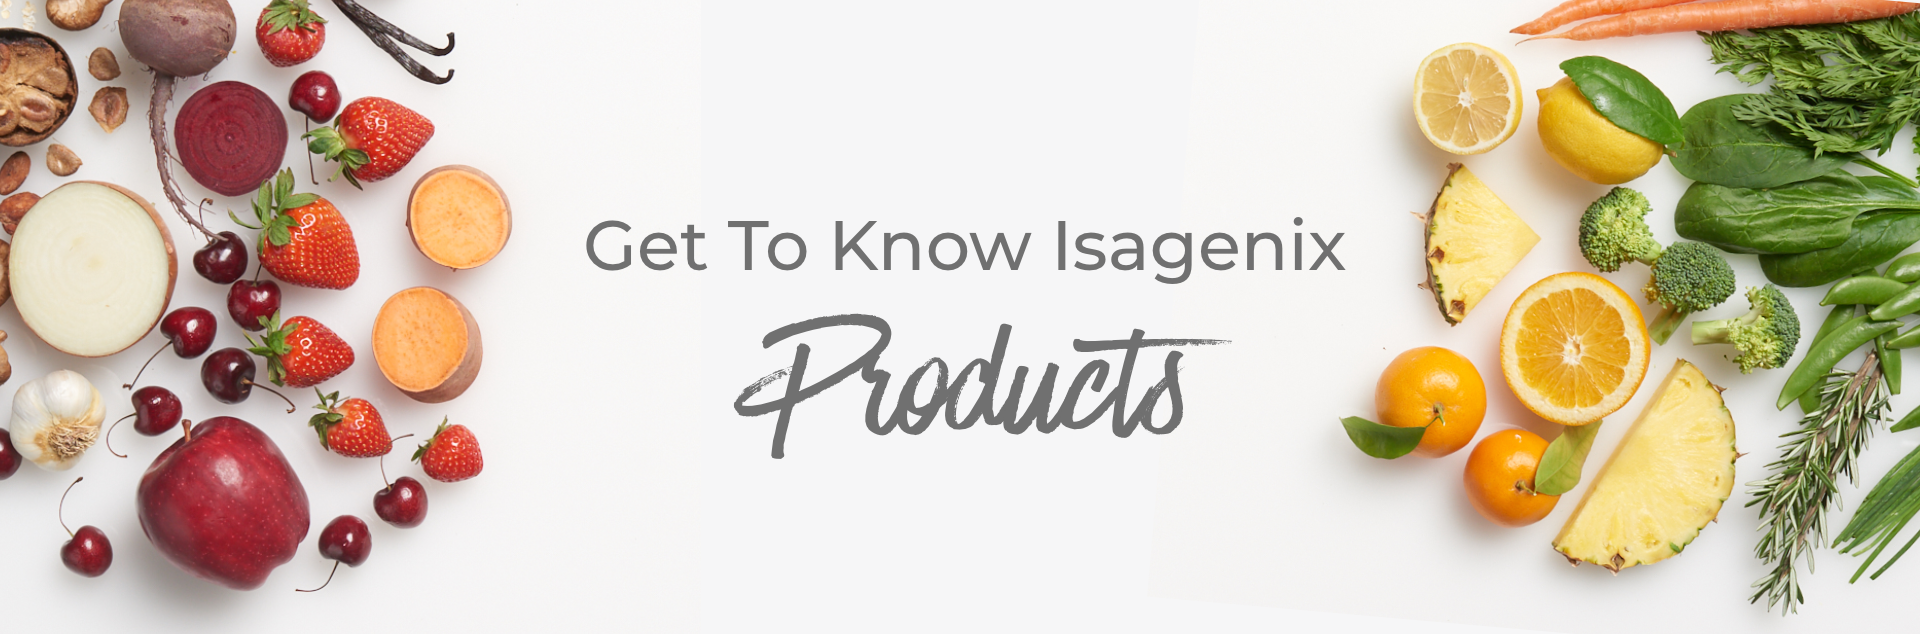 buy isagenix products